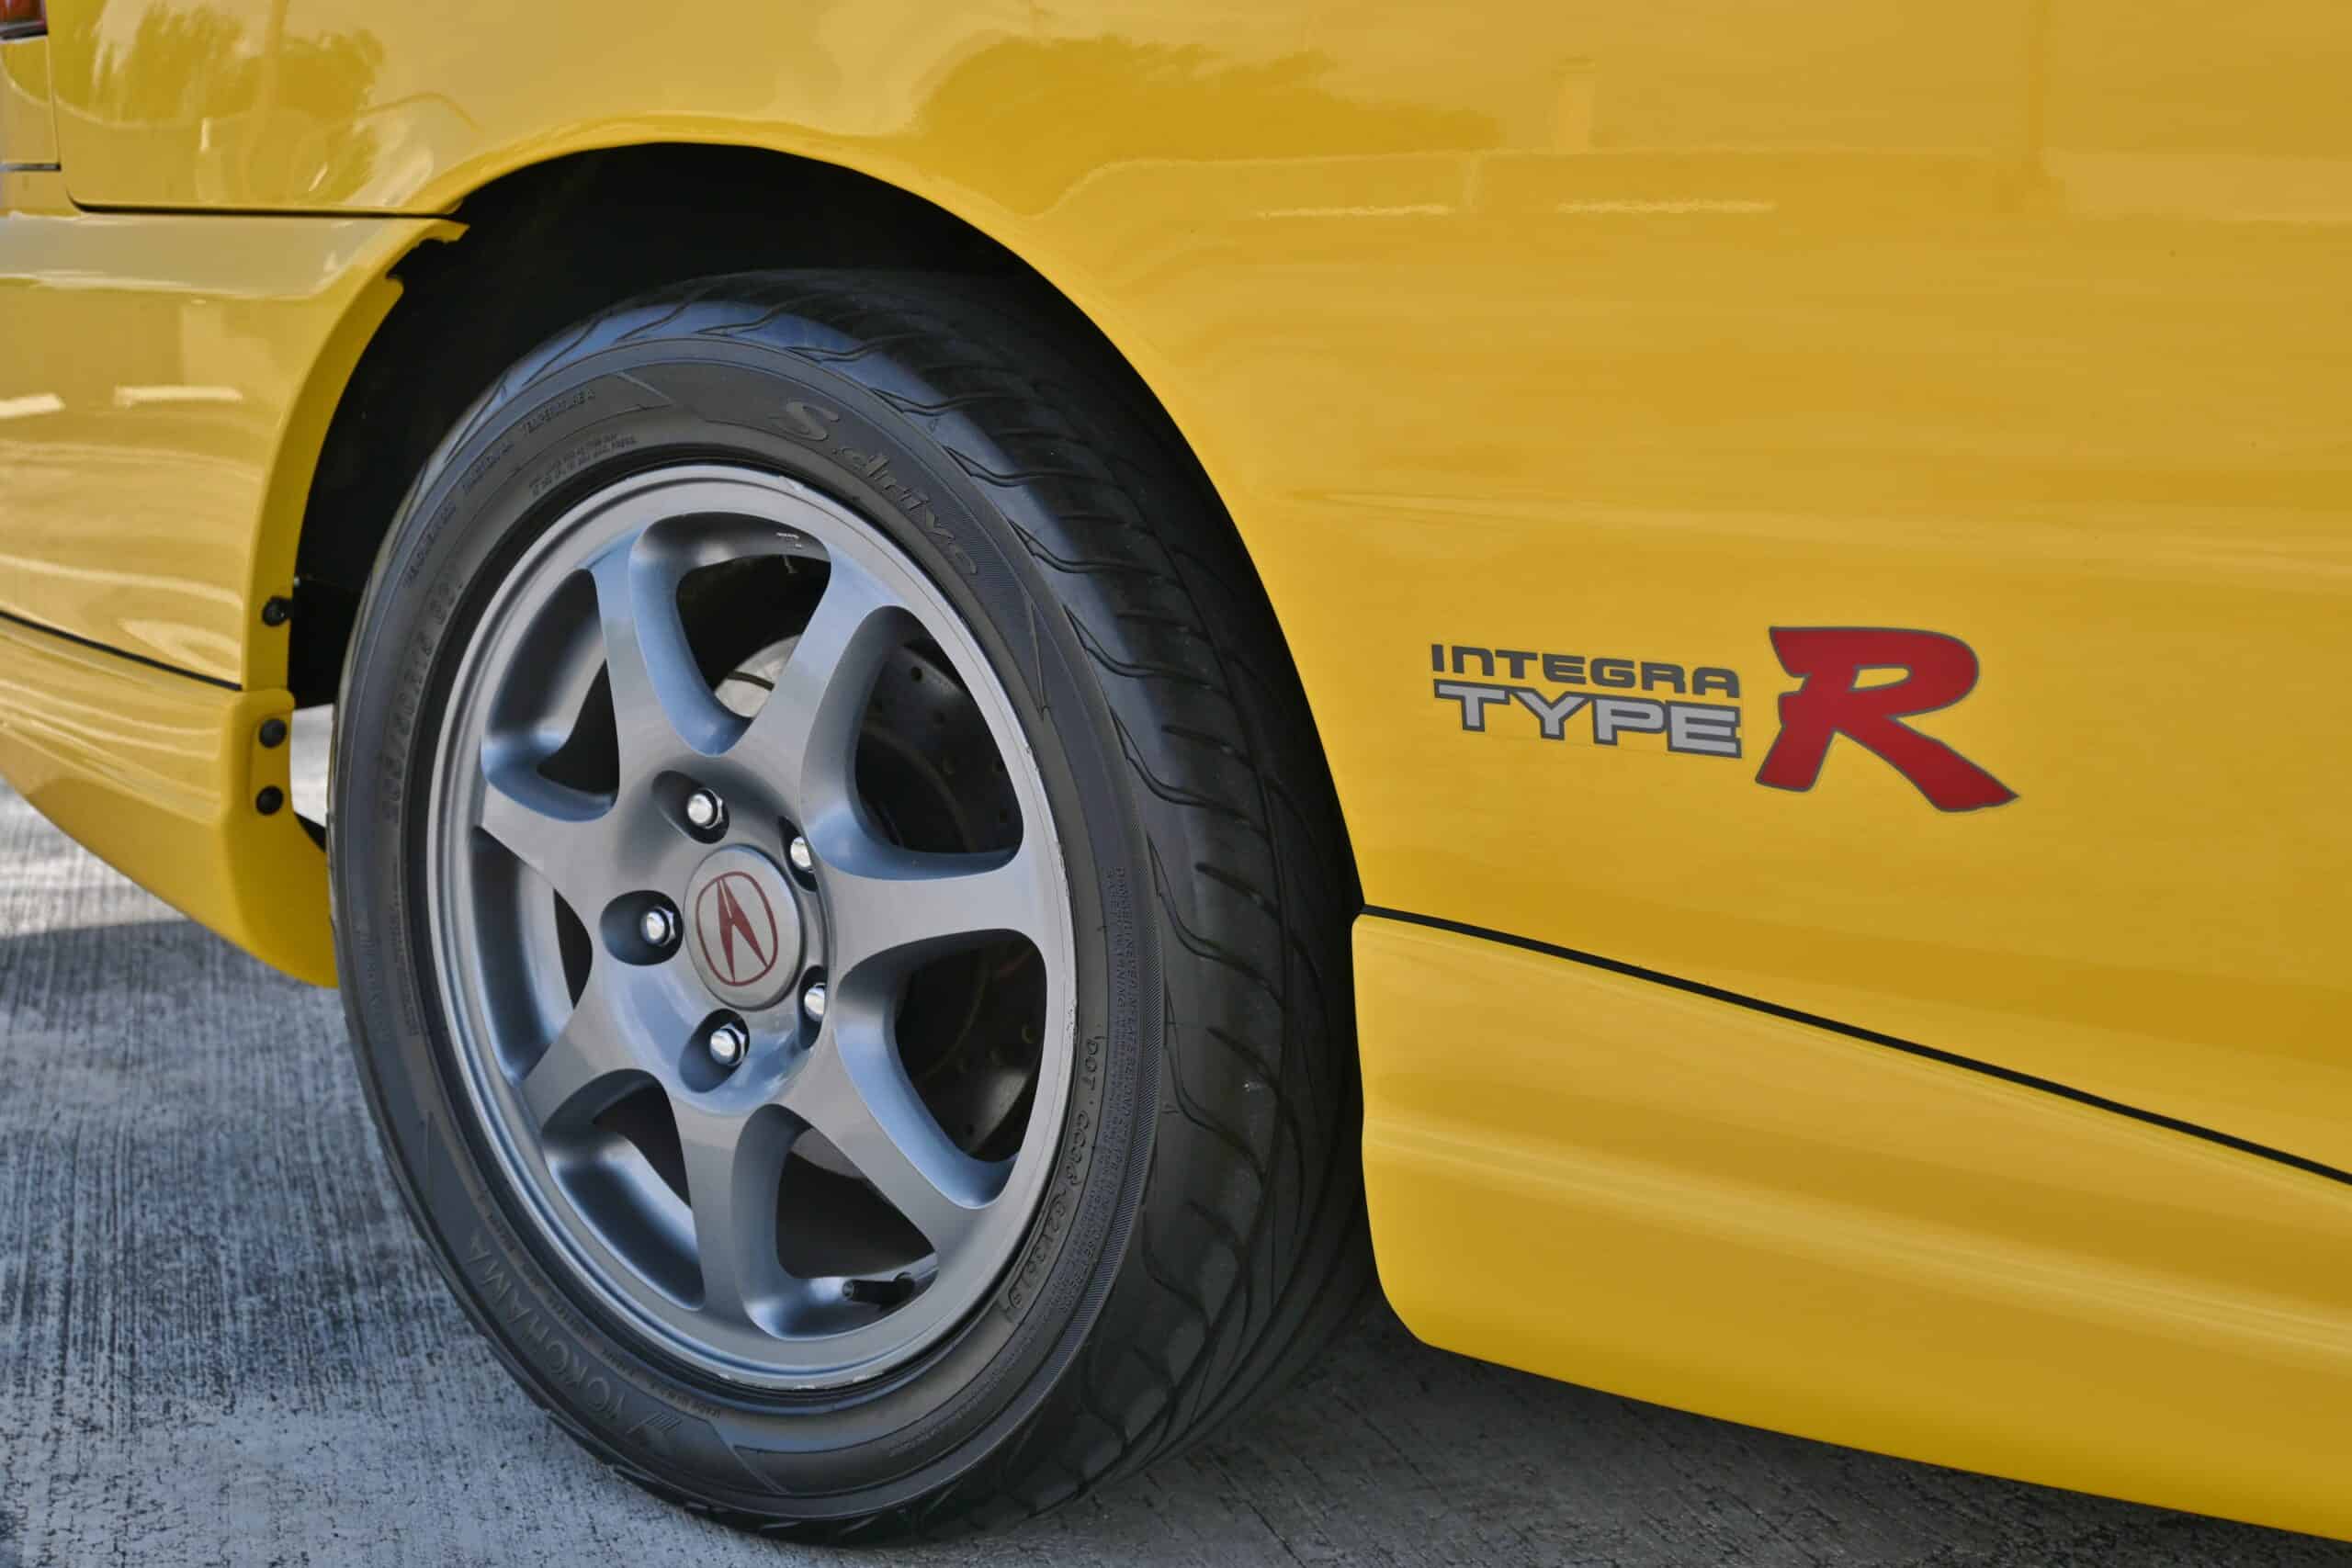 2001 Acura Integra Type R #1009 Rare Phoenix Yellow / 30K Actual Miles / 100% Stock / Clean history / Like NEW!